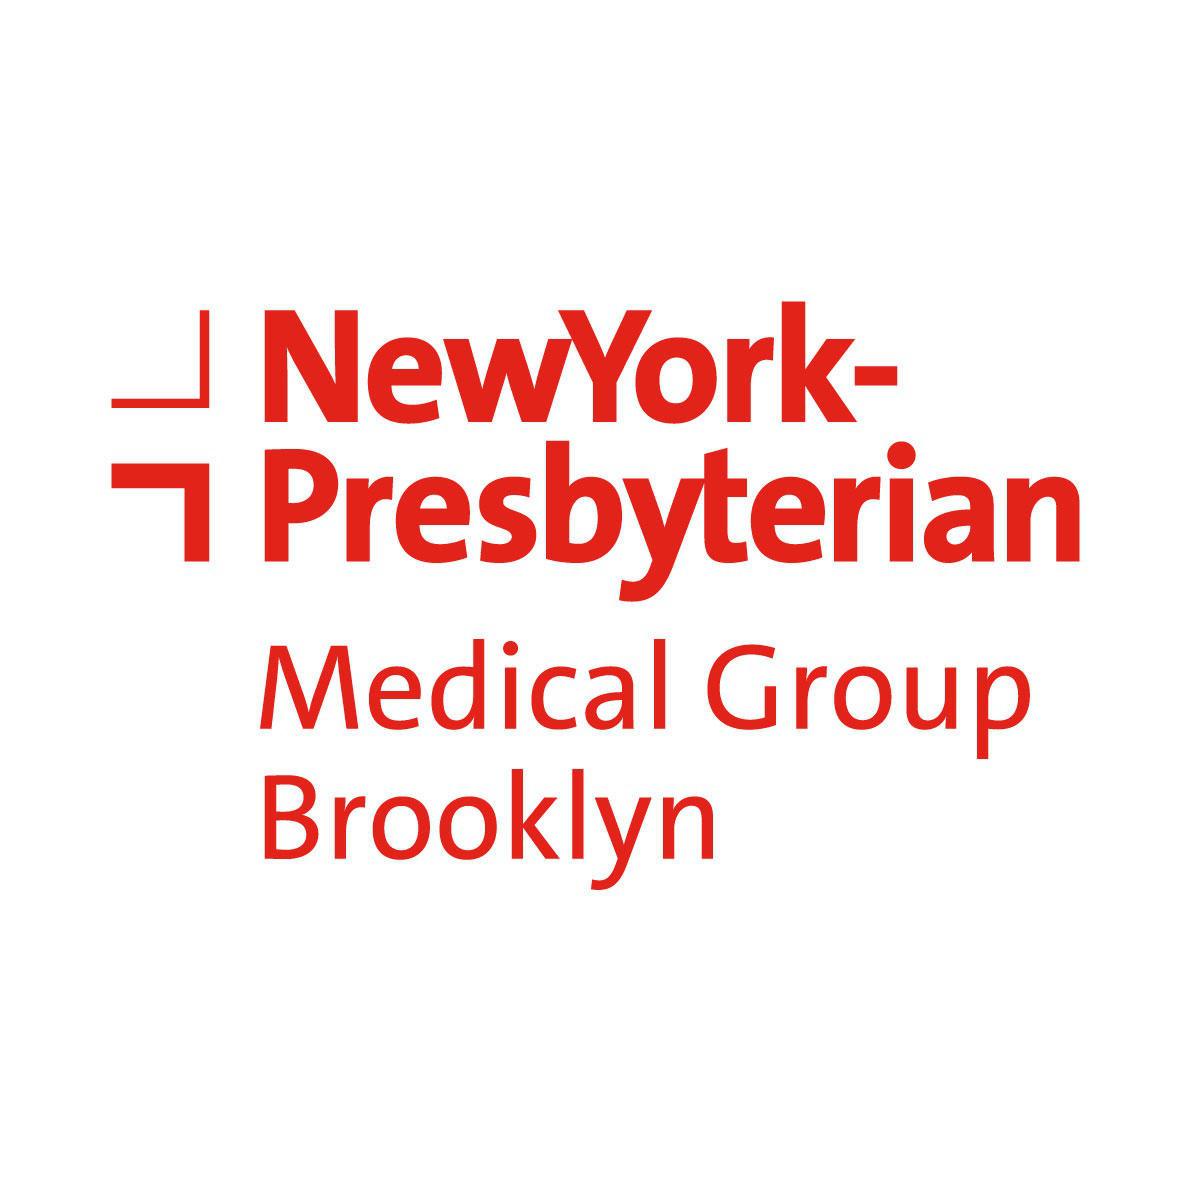 NewYork-Presbyterian Medical Group Brooklyn - Multispecialty